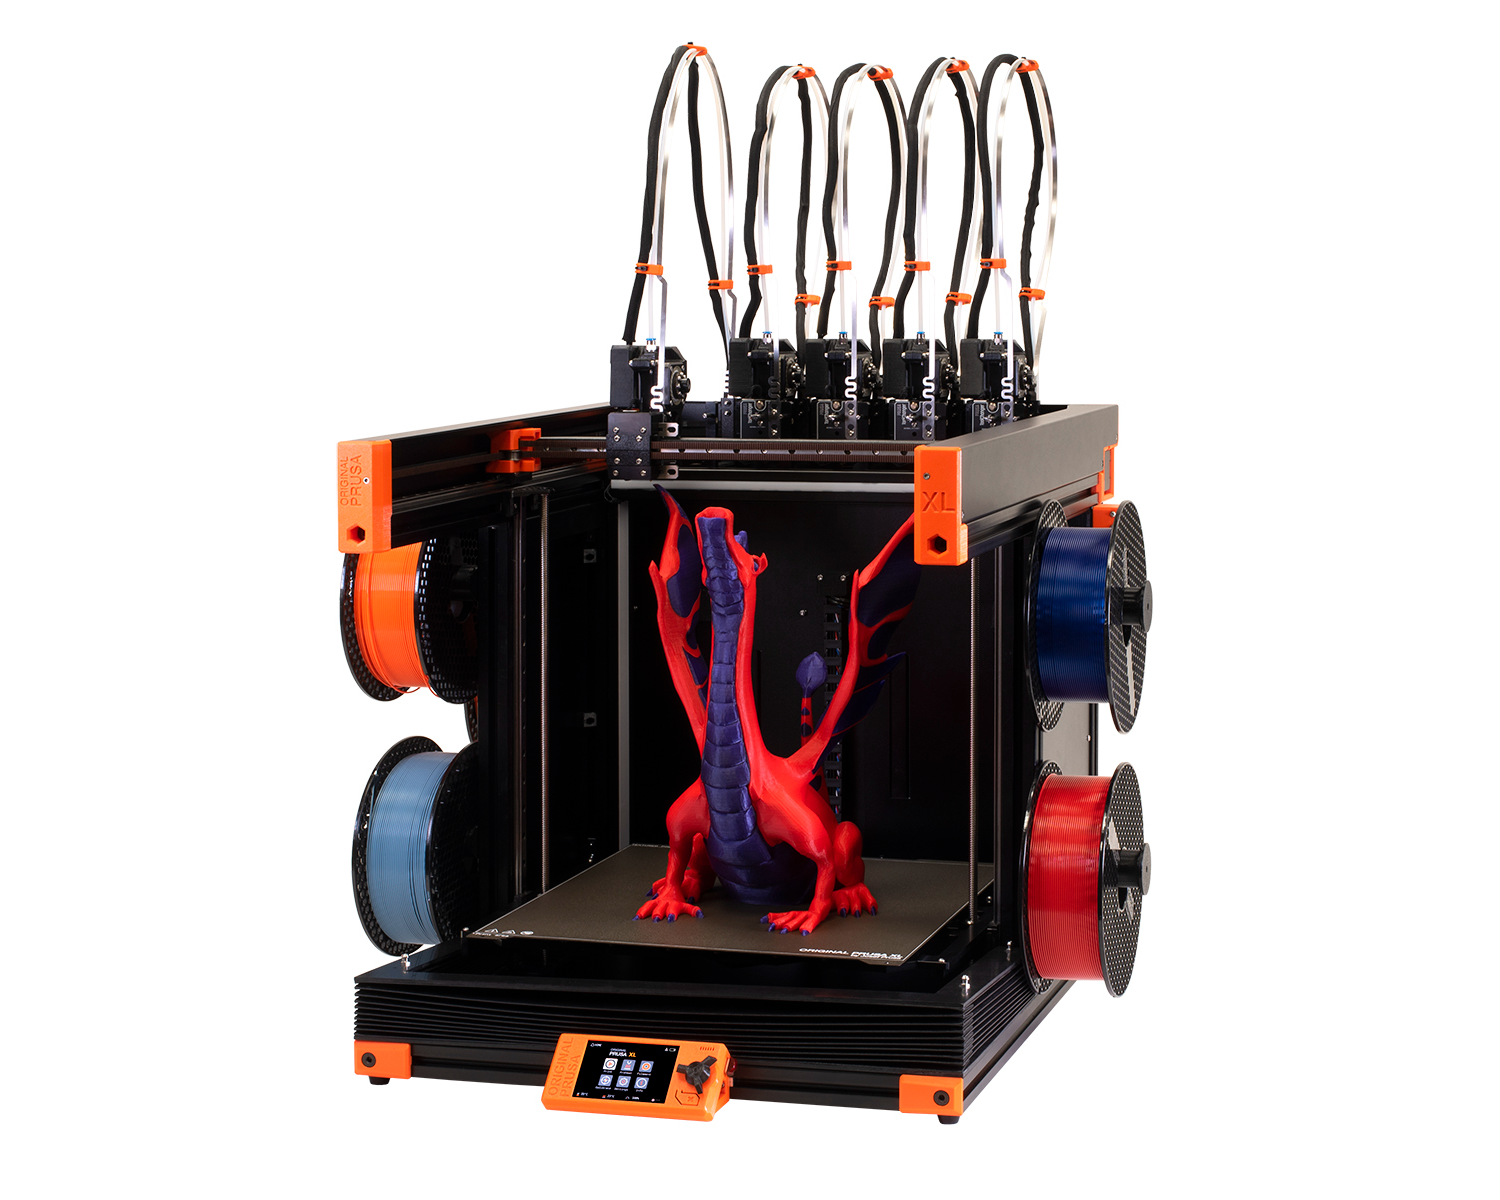 Prusa debuts its largeformat toolchanger system, the XL 3D printer